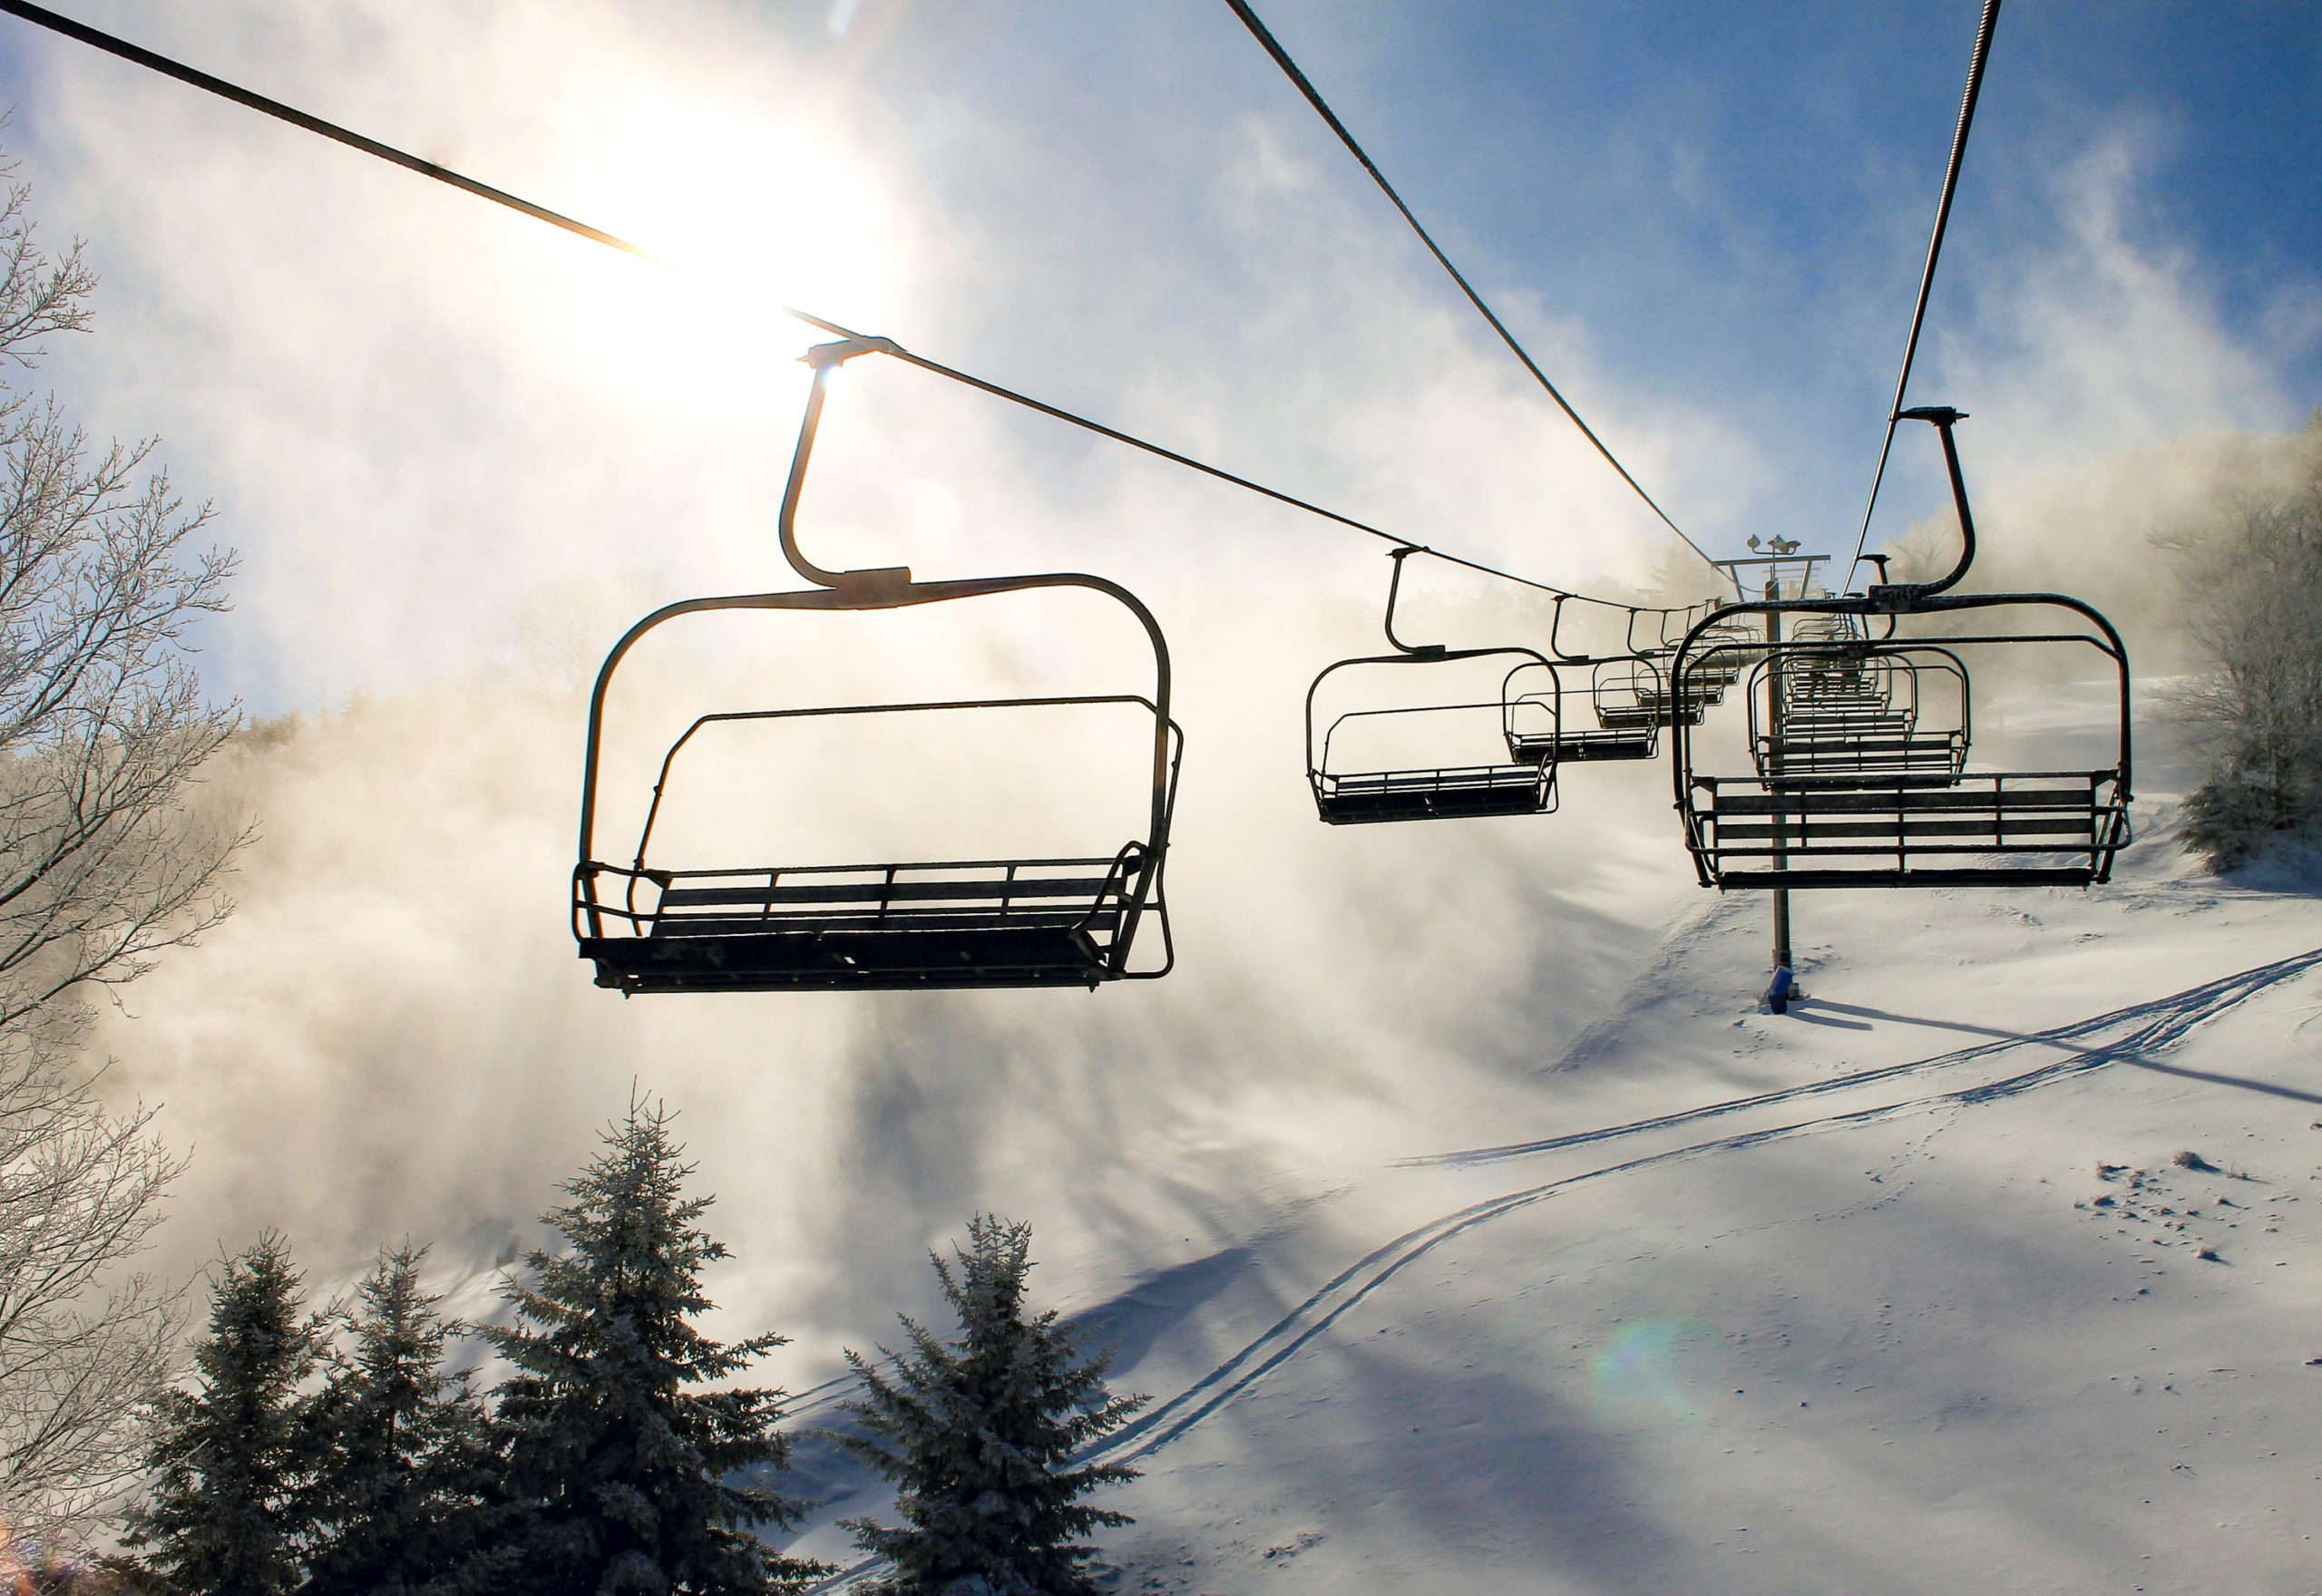 The 9 Best Ski Resorts Close to DC | Washingtonian